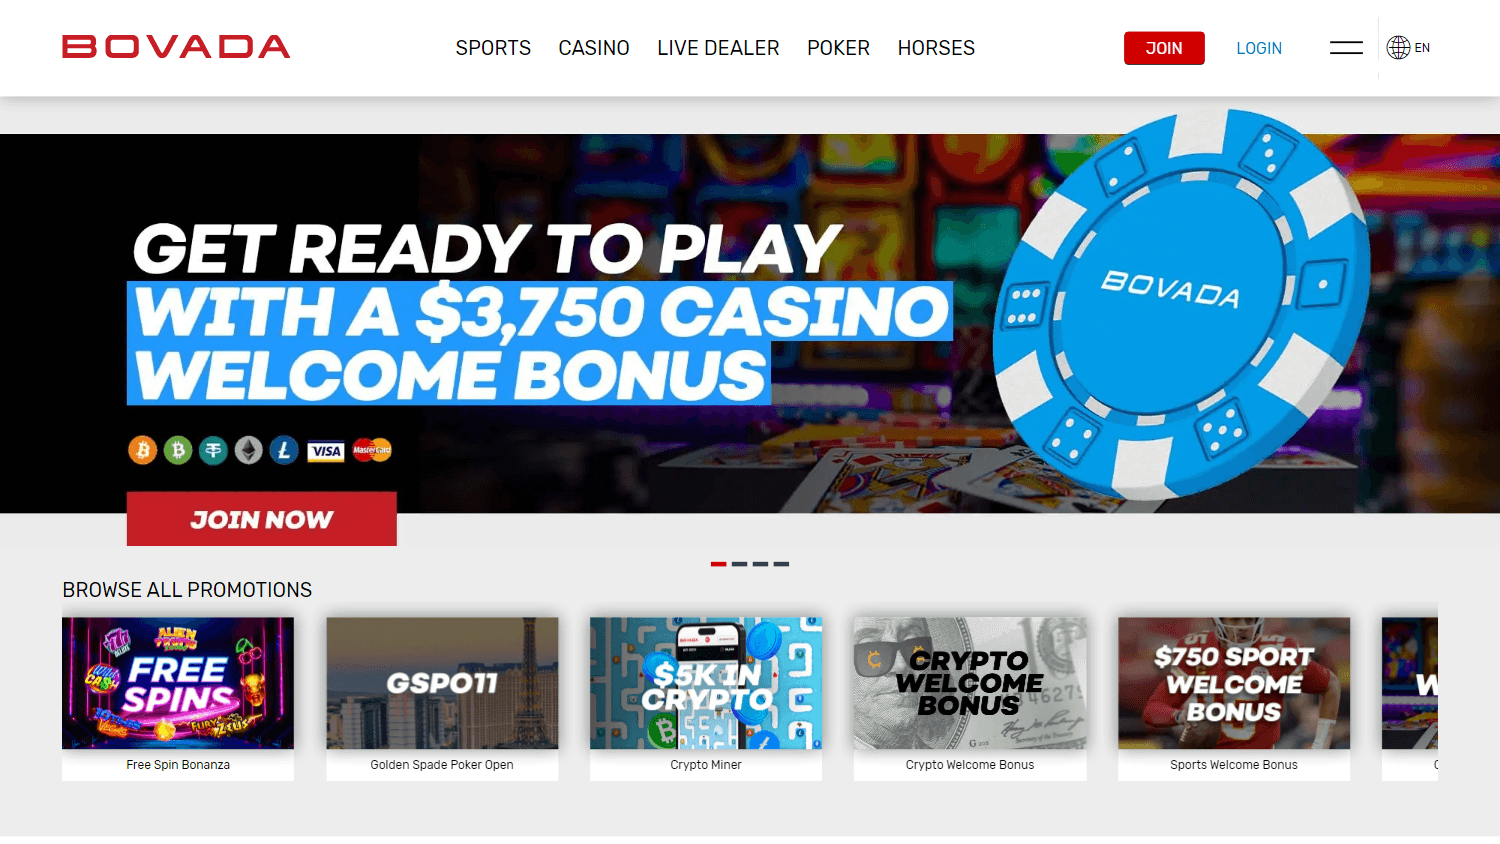 bovada_casino_promotions_desktop